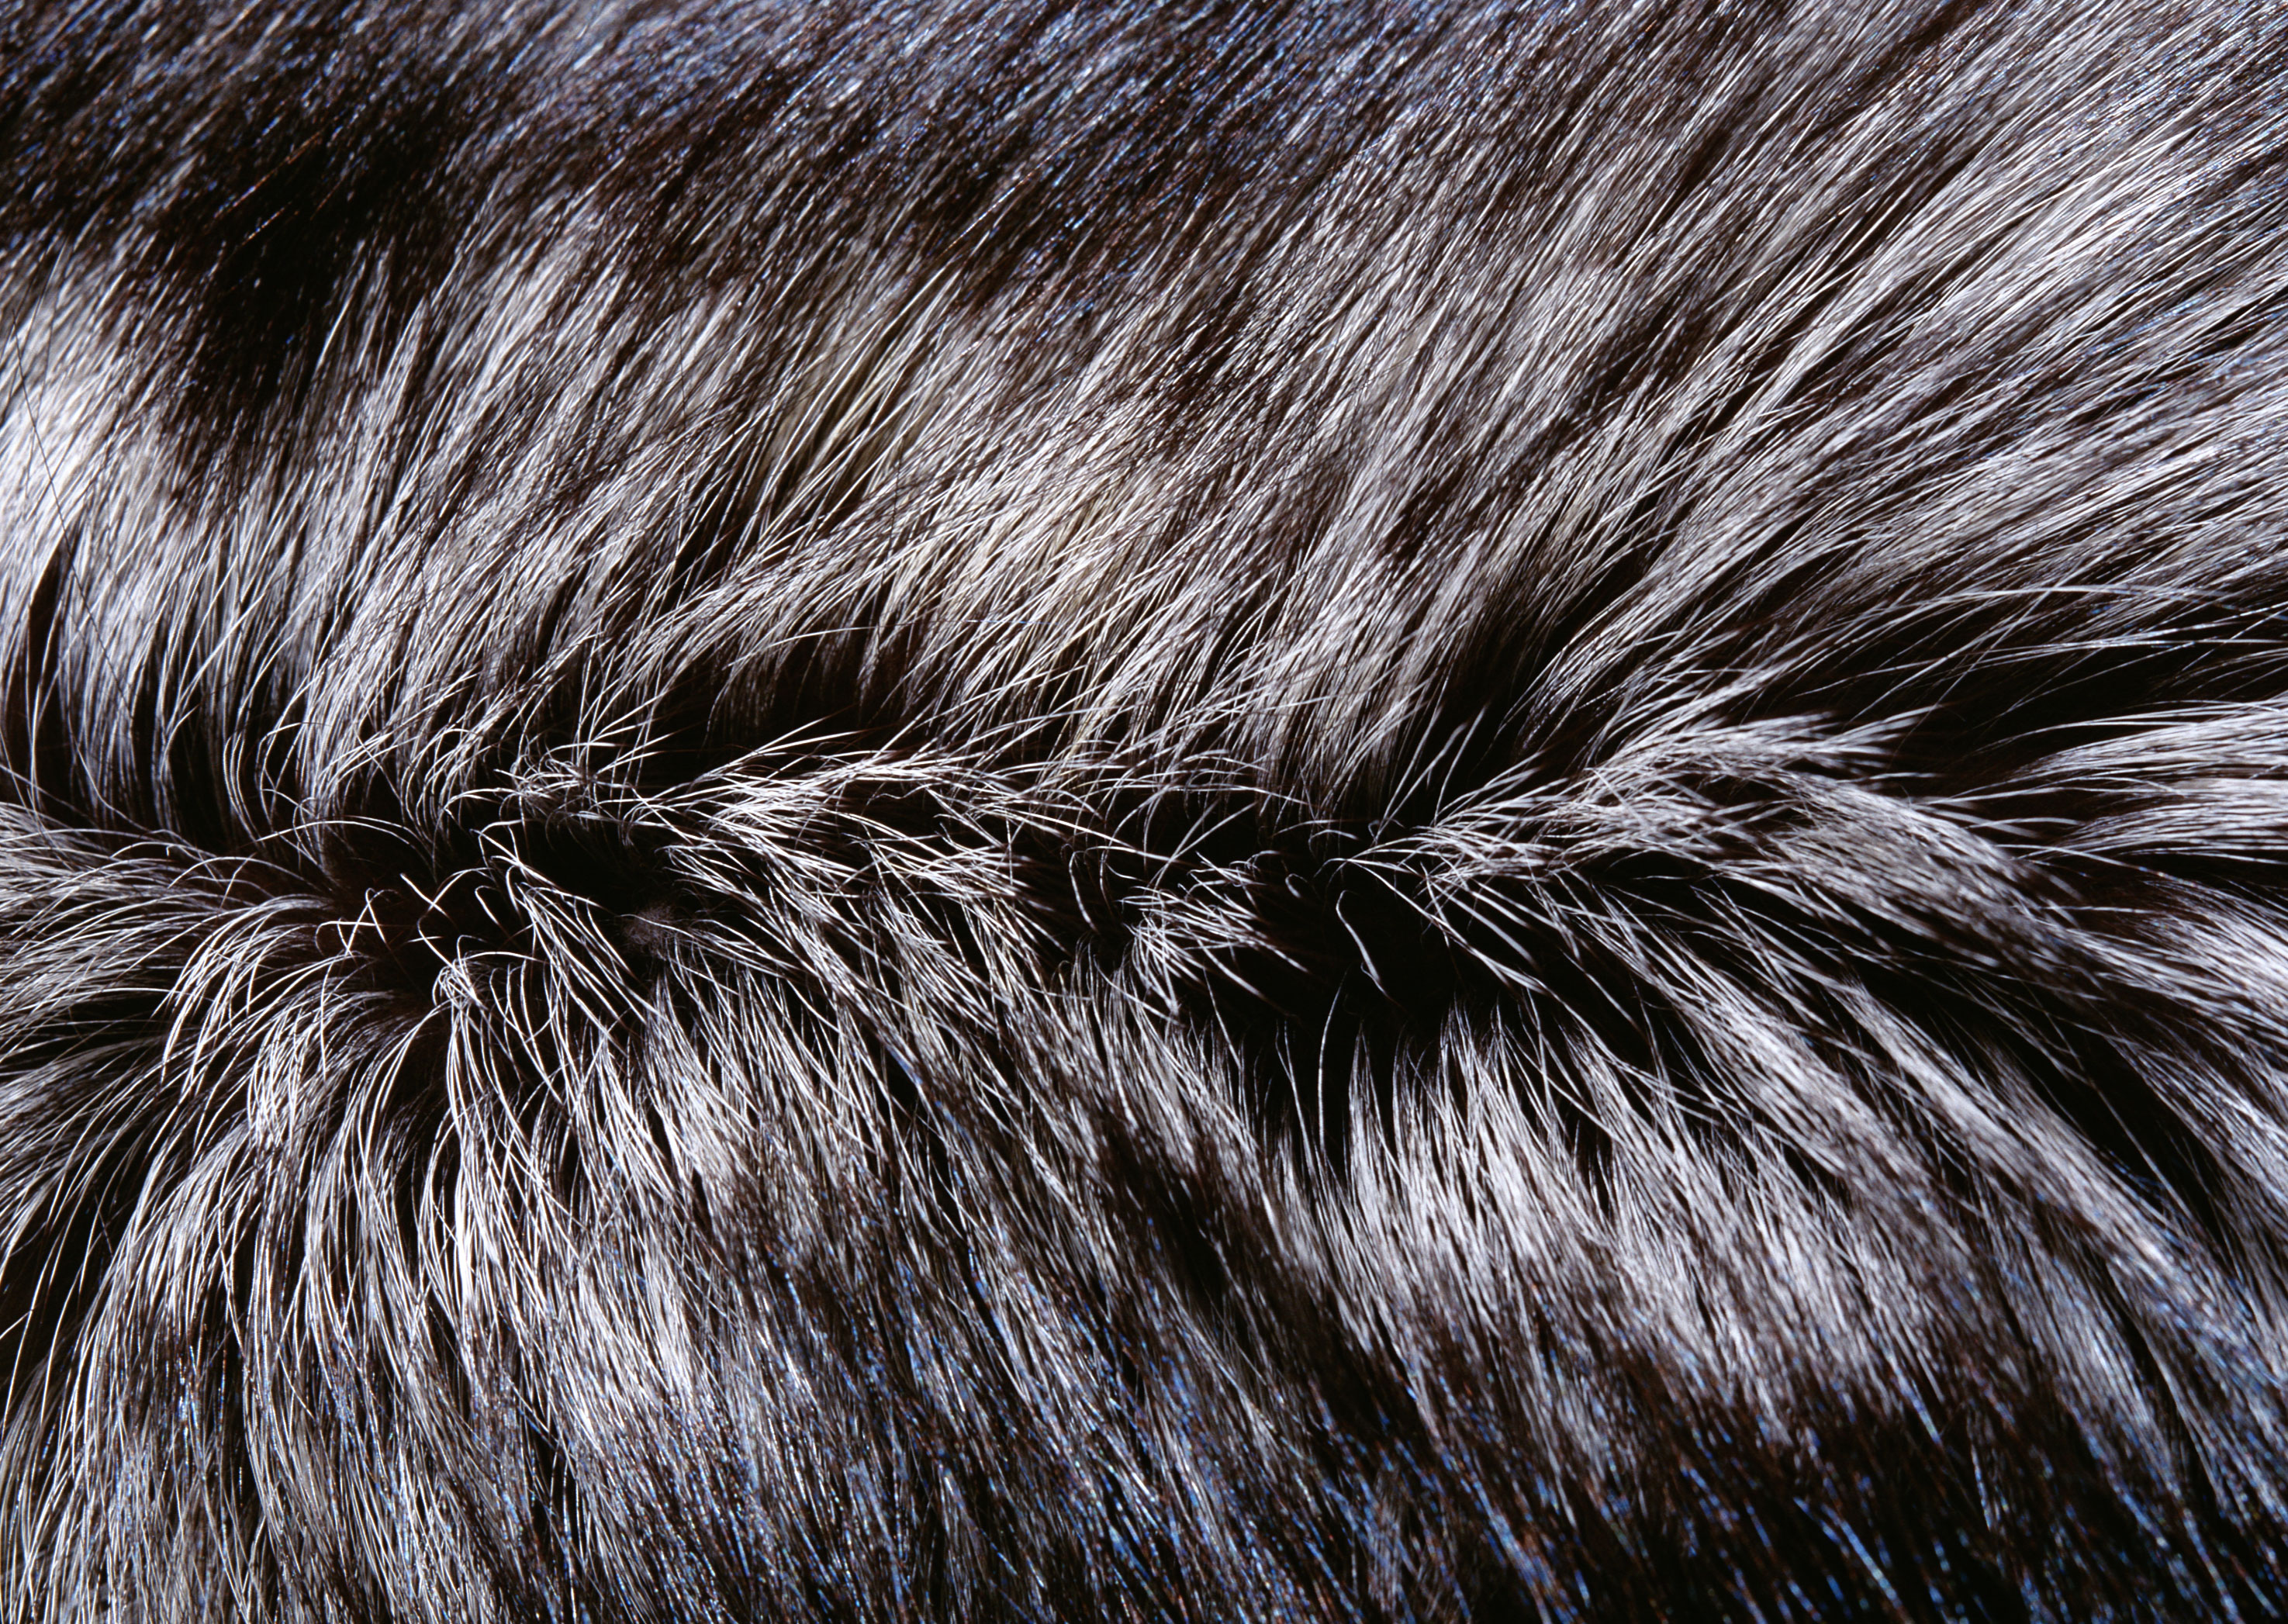 Natural fur texture background image